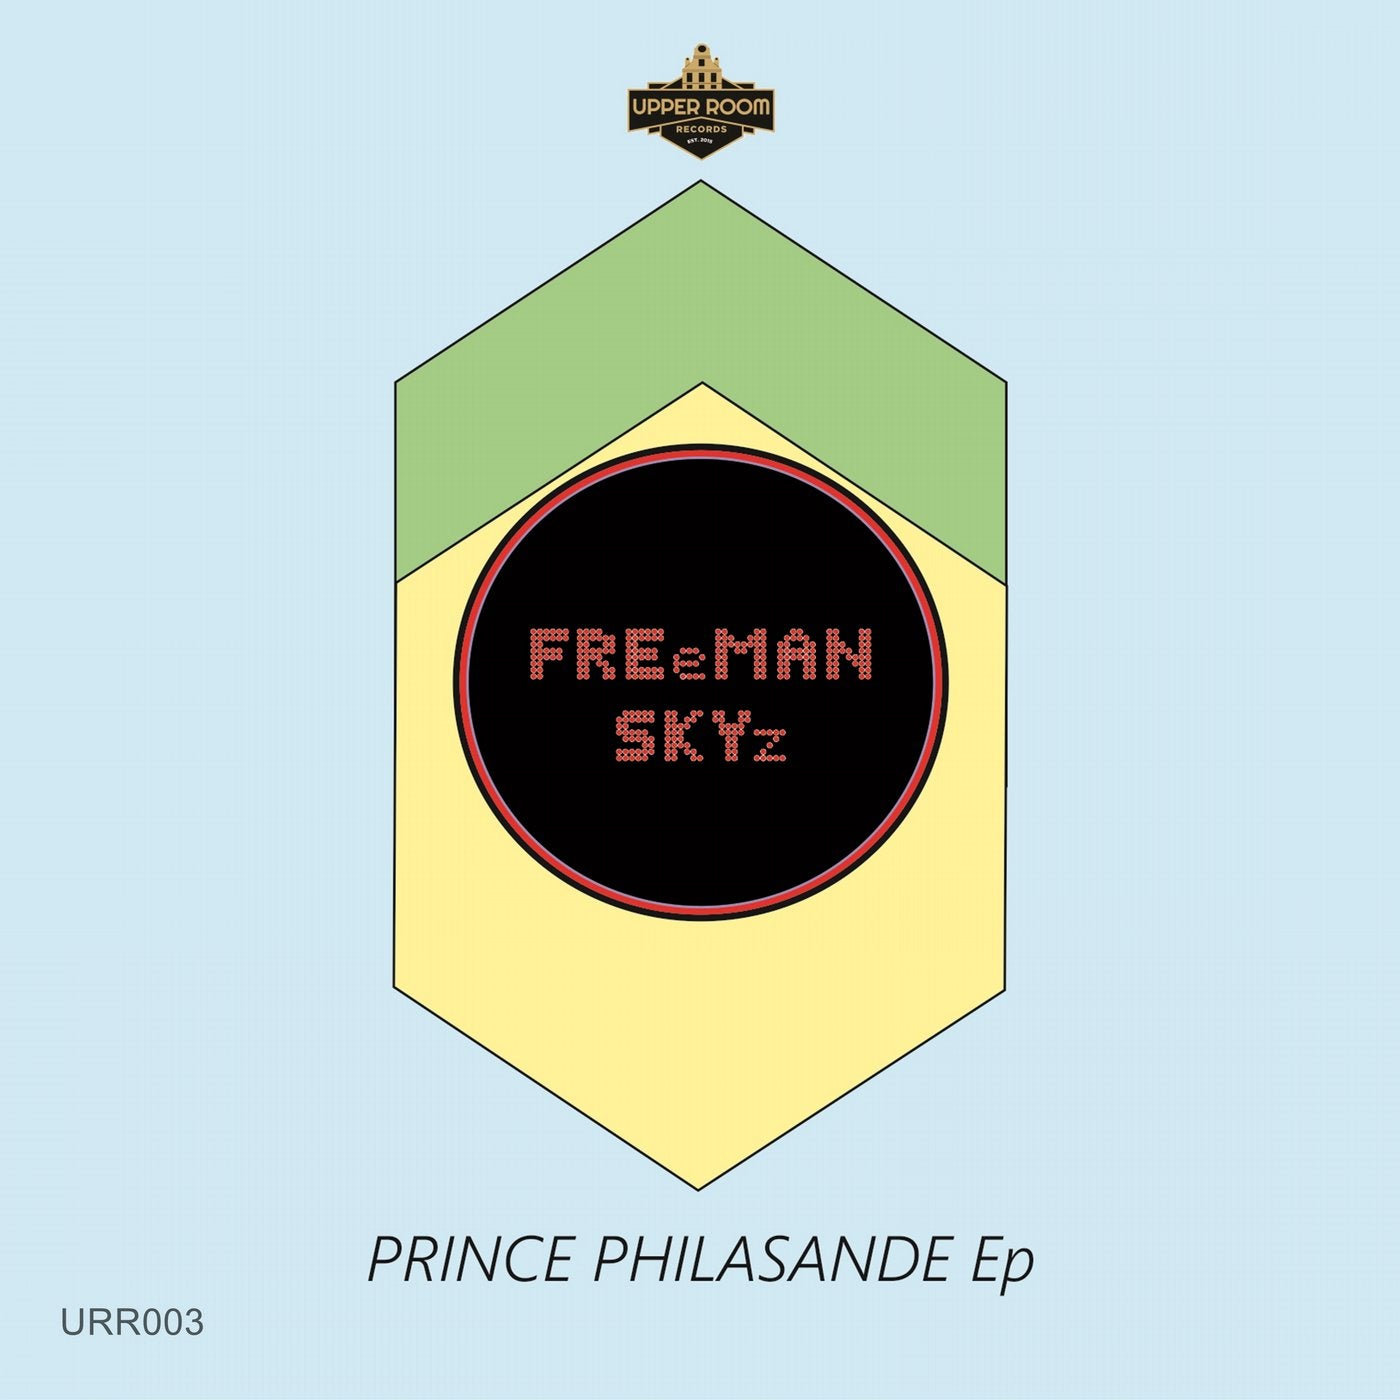 Prince Philasande